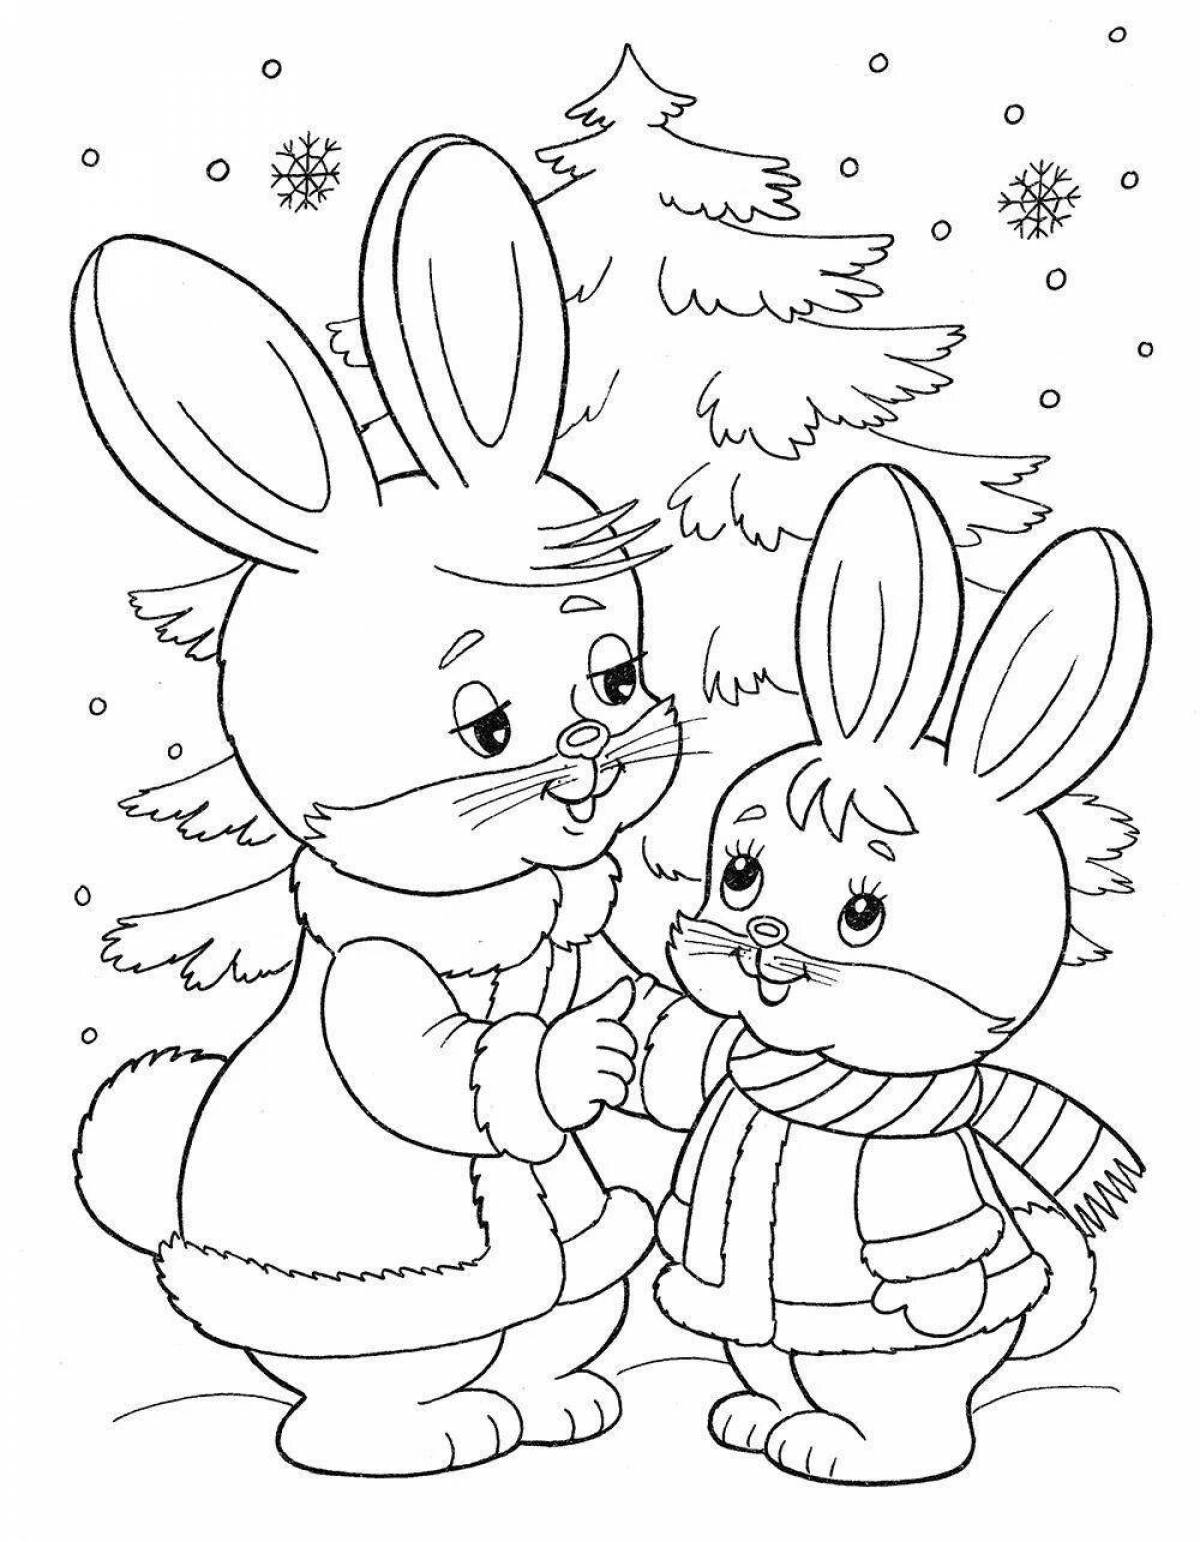 Hare in winter #12